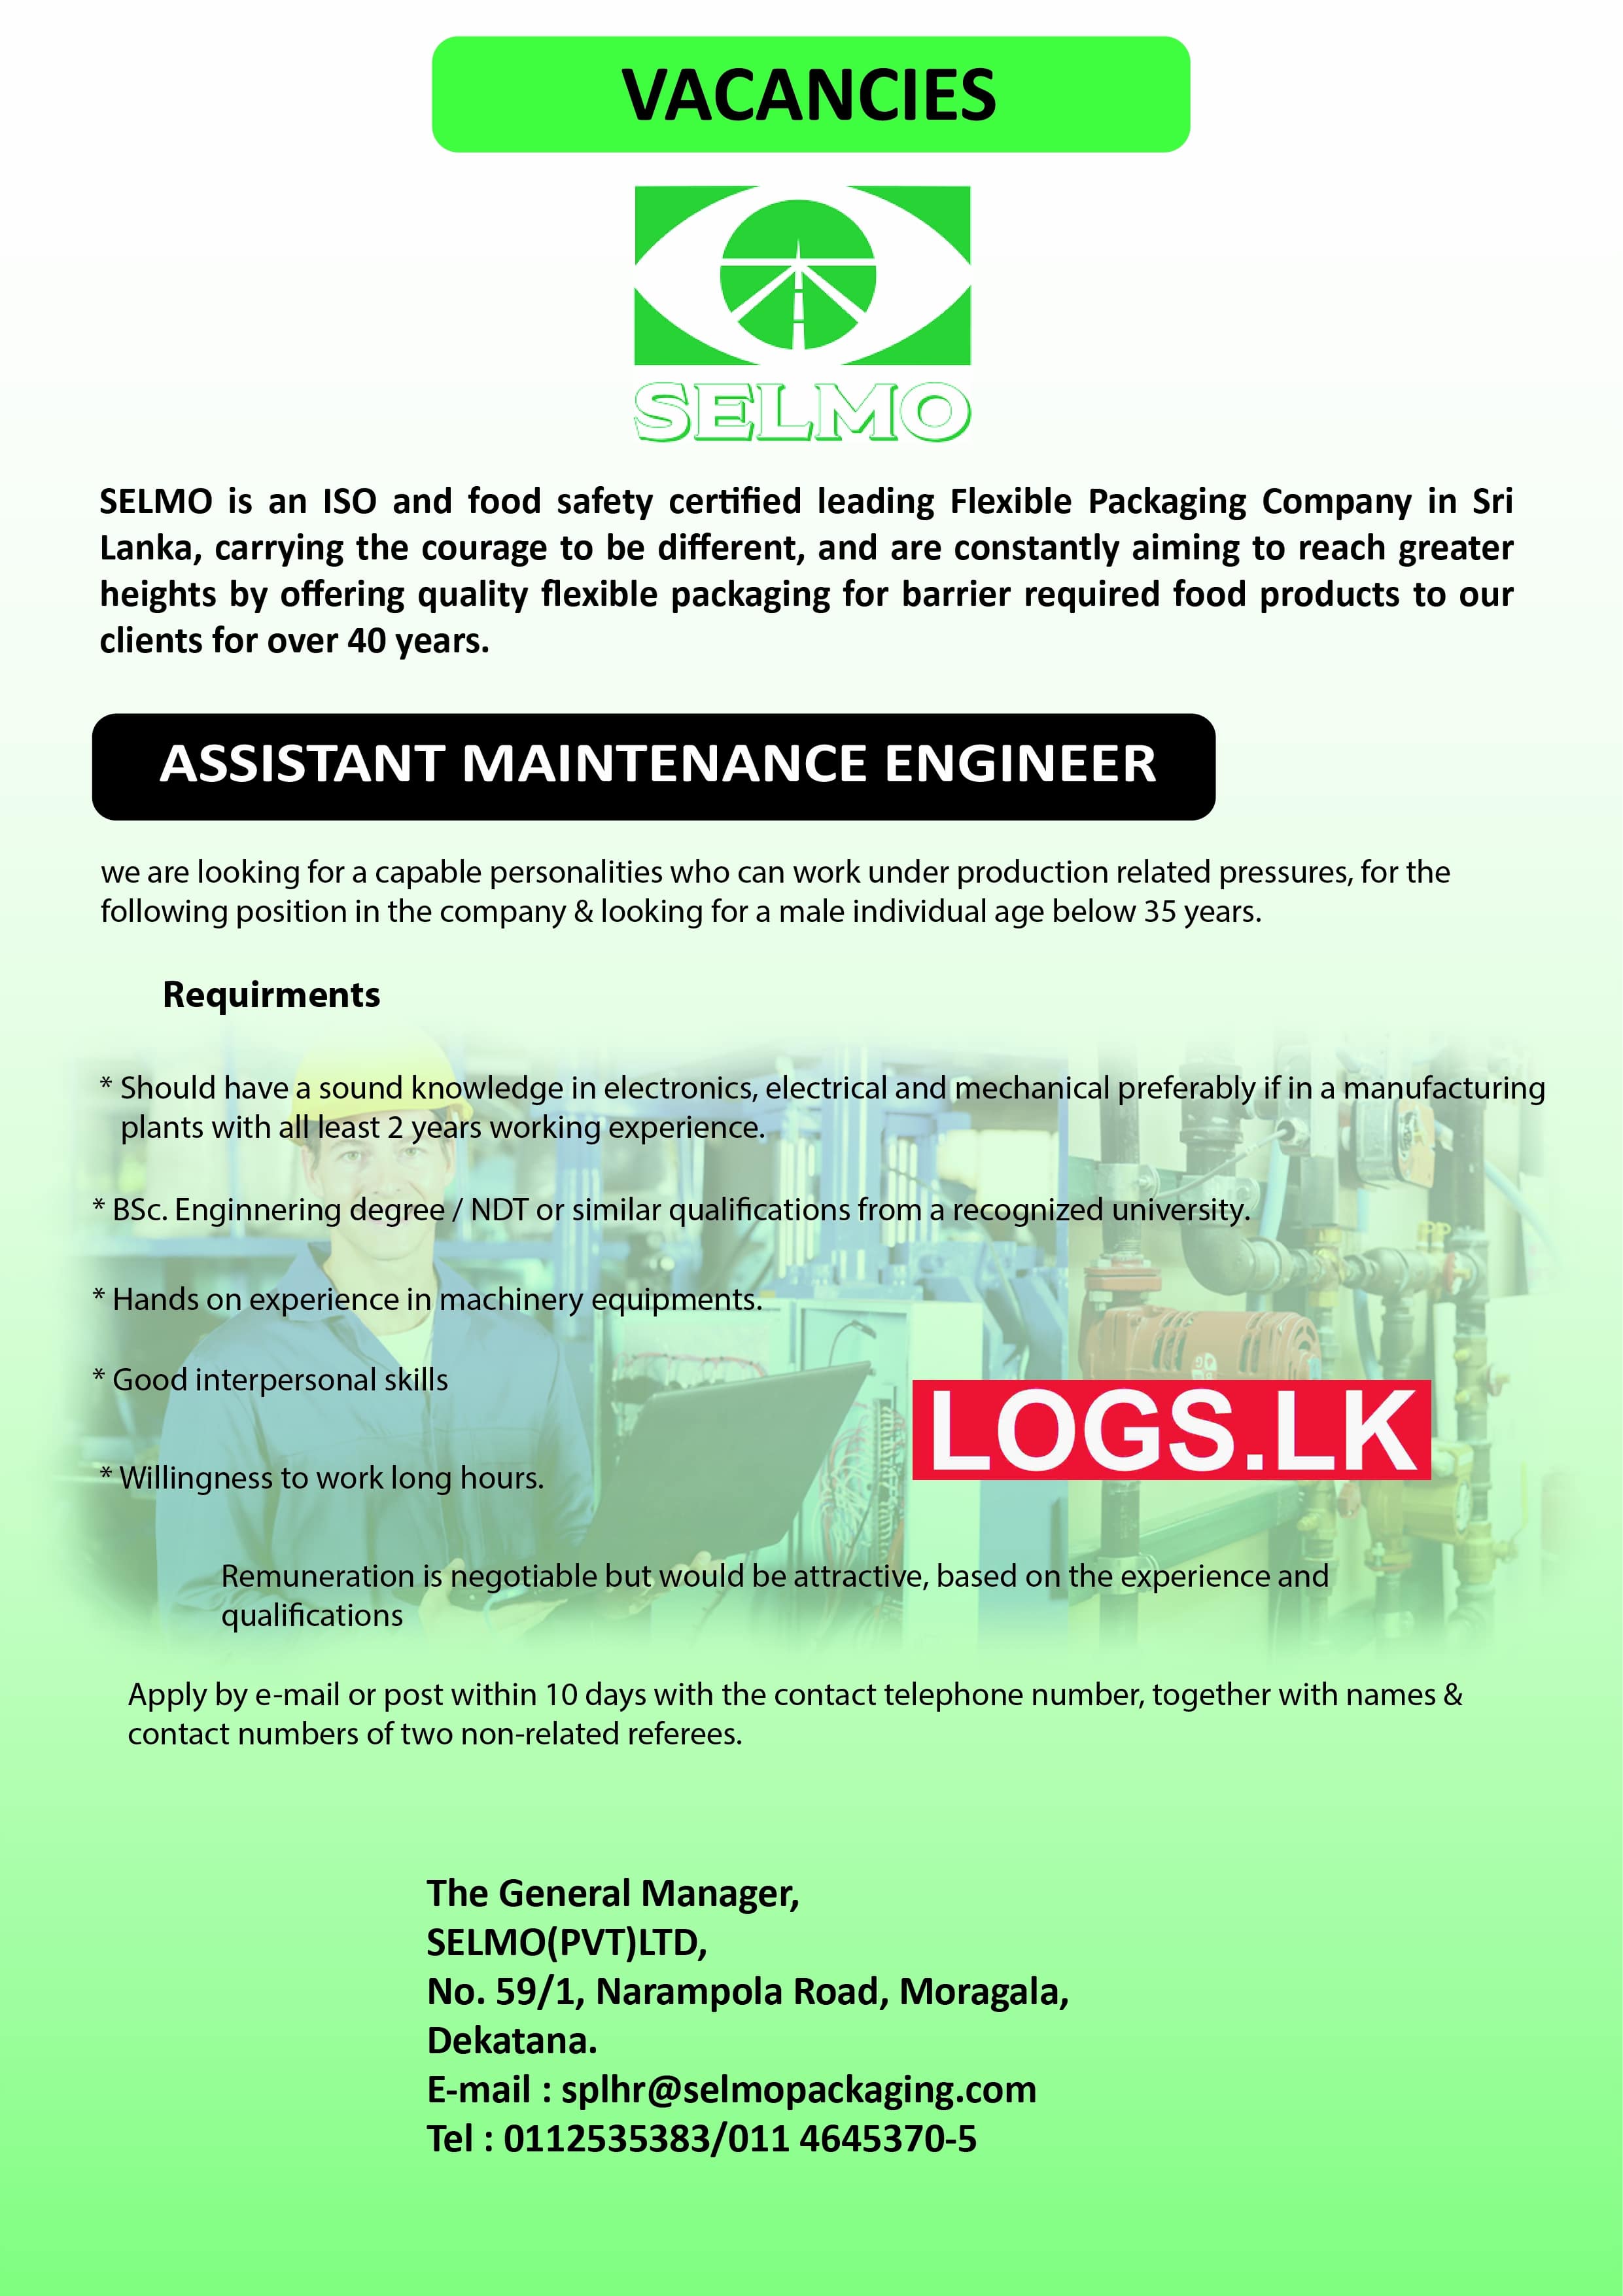 Assistant Maintenance Engineer Job Vacancy at Selmo (Pvt) Ltd Jobs Application